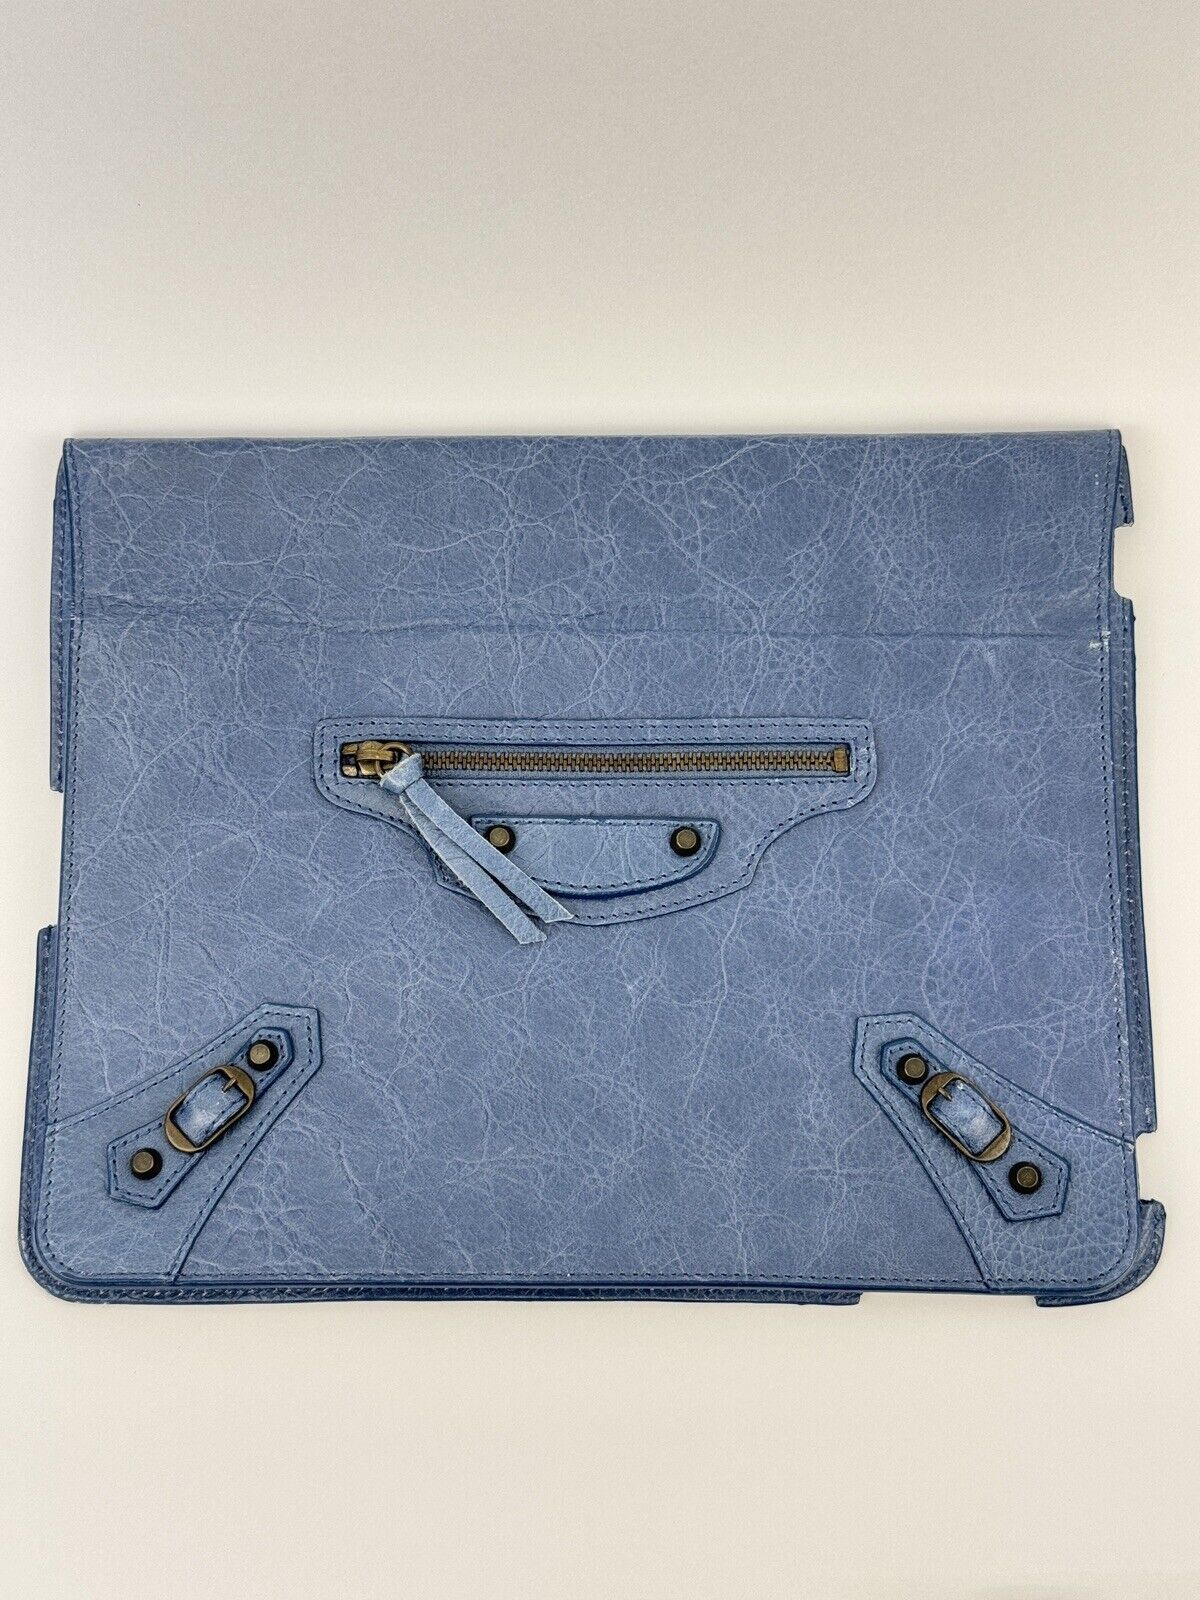 Balenciaga Paris Leather Ipad Tablet Folios Case BLUE 100% authentic Collectible